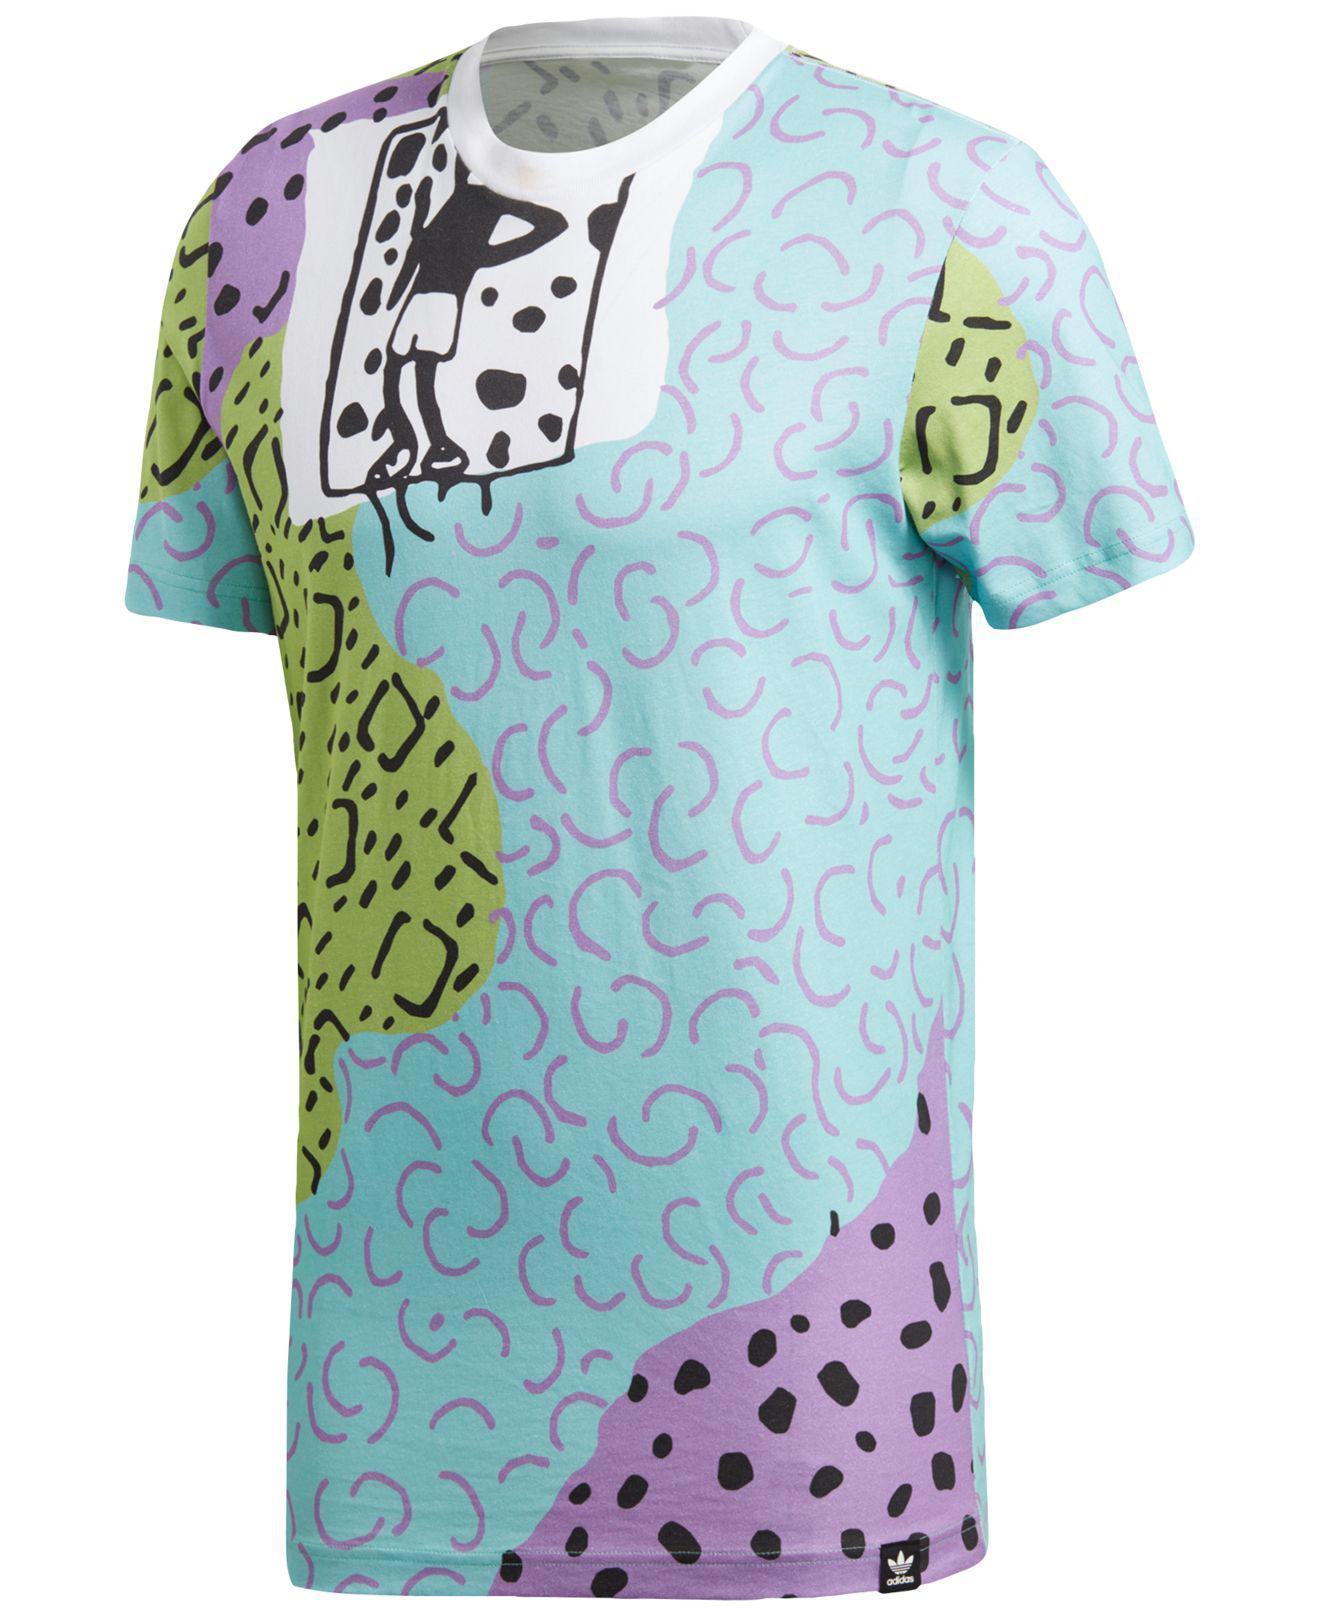 Pop Art Adidas Logo - Adidas Originals Pop Art Graphic T Shirt In Green For Men